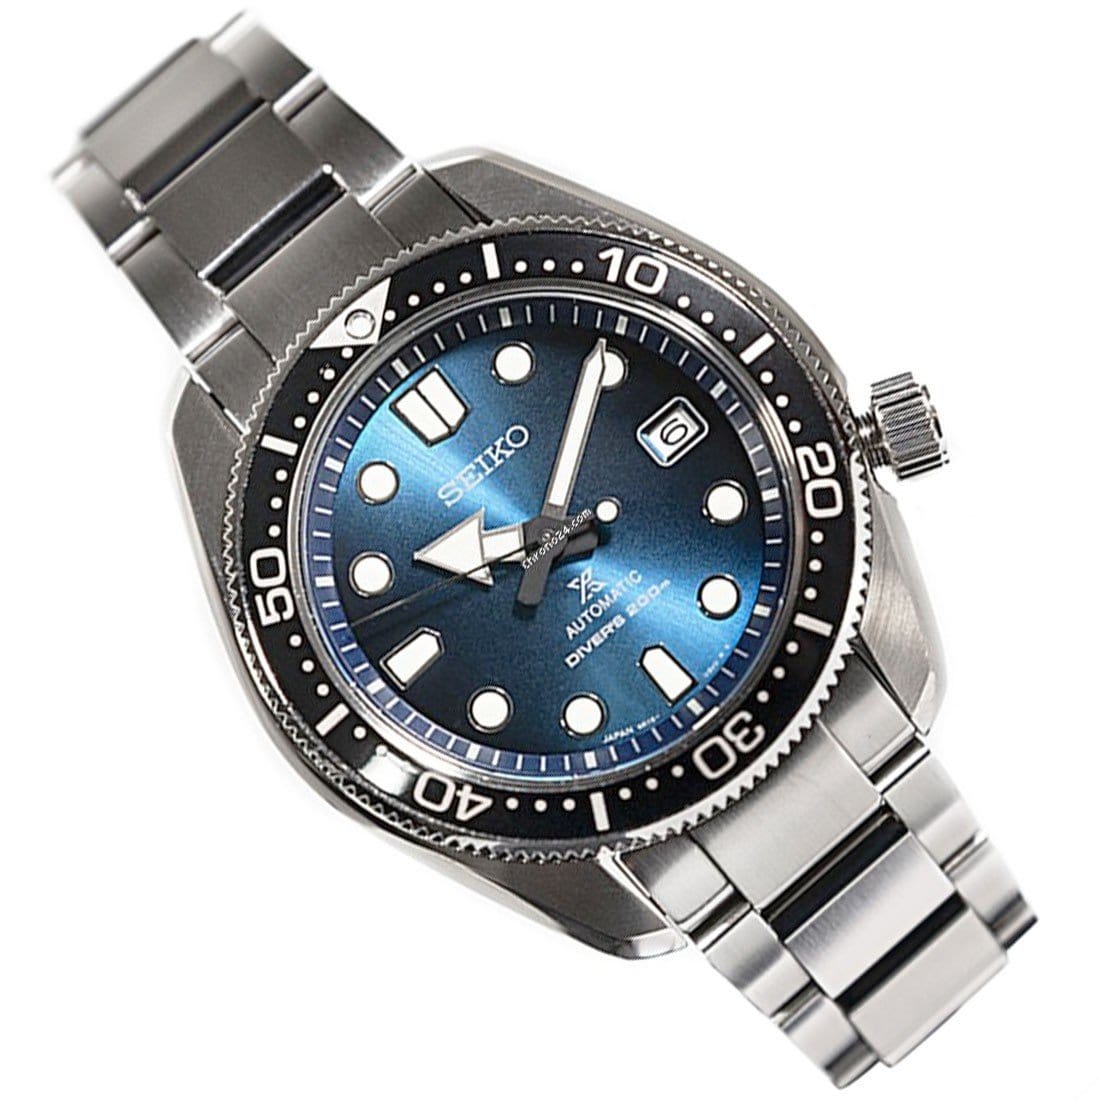 Seiko Automatic Prospex Divers 200m JDM Watch SBDC065